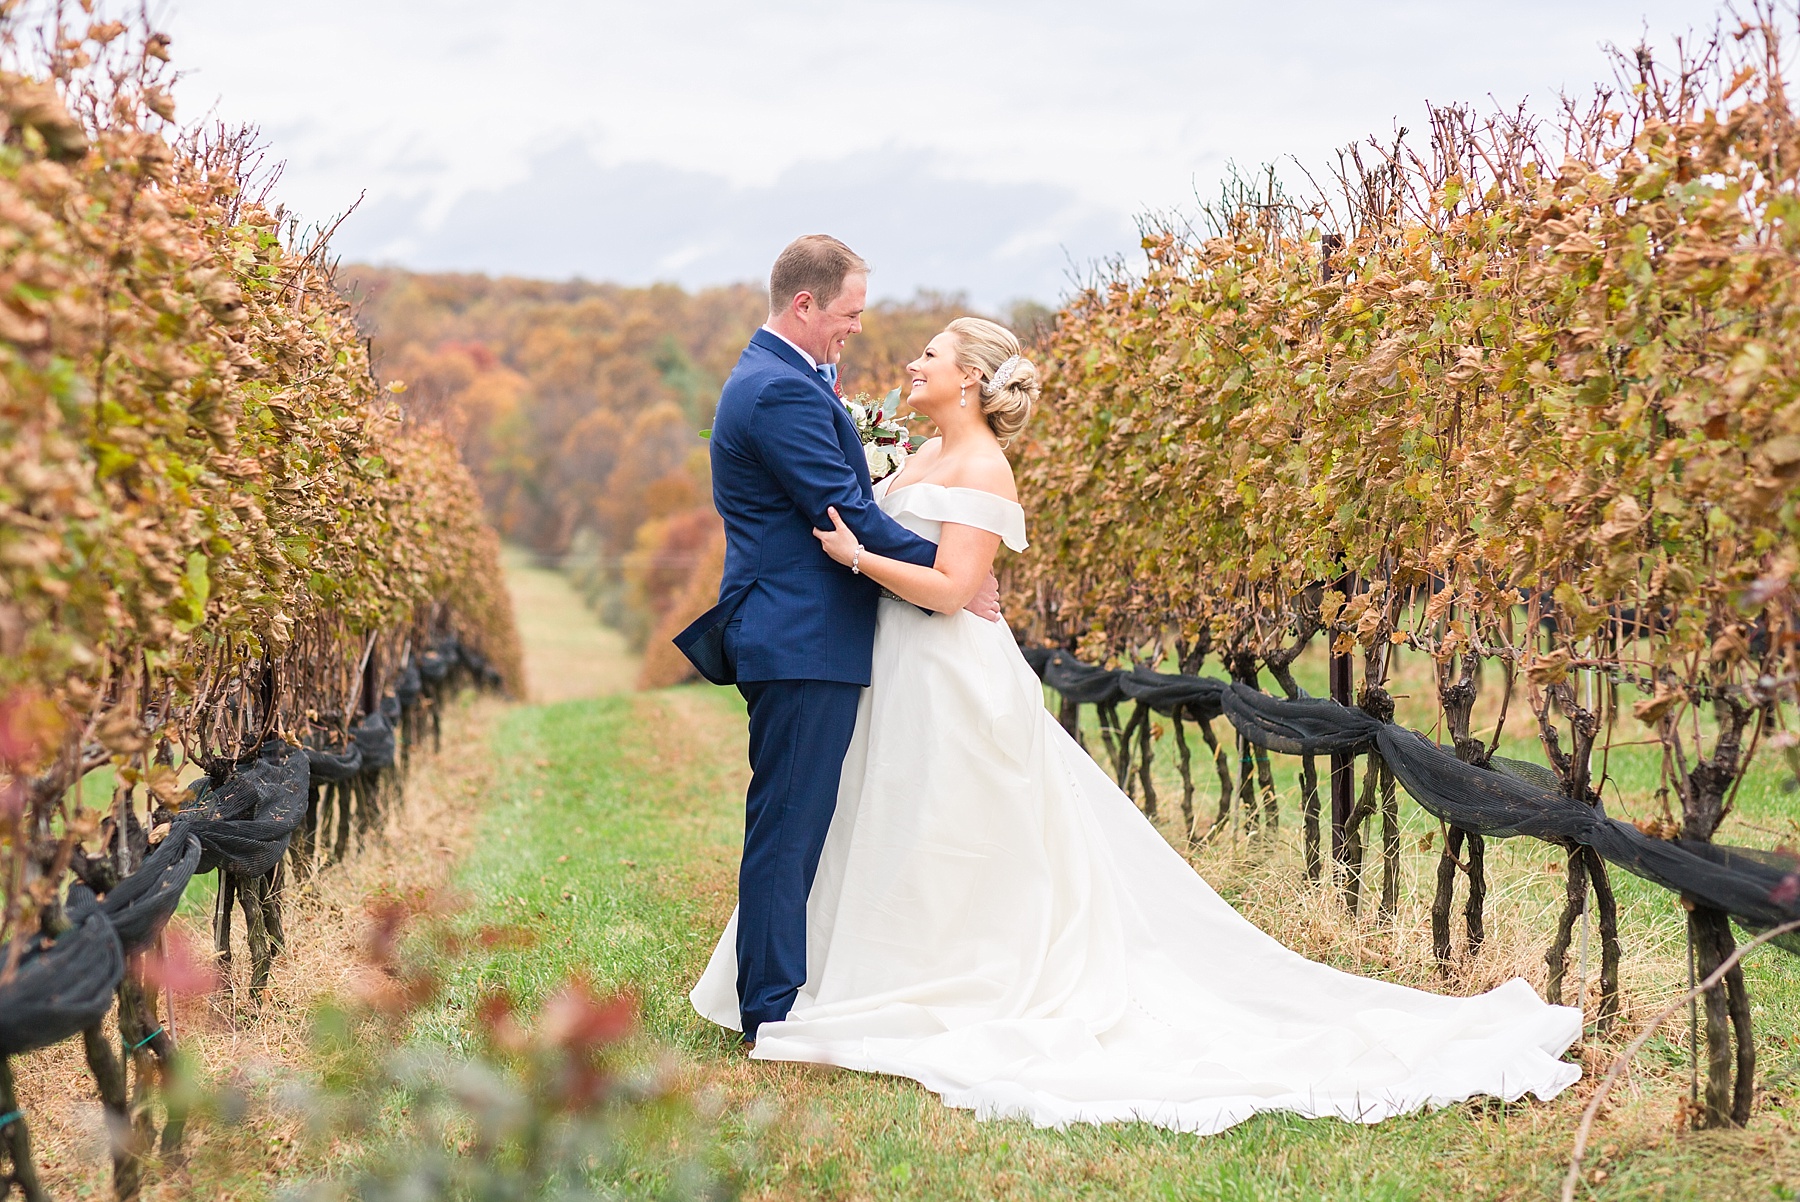  Alexandra Mandato Photography photographs wedding photos at Stone Tower Winery